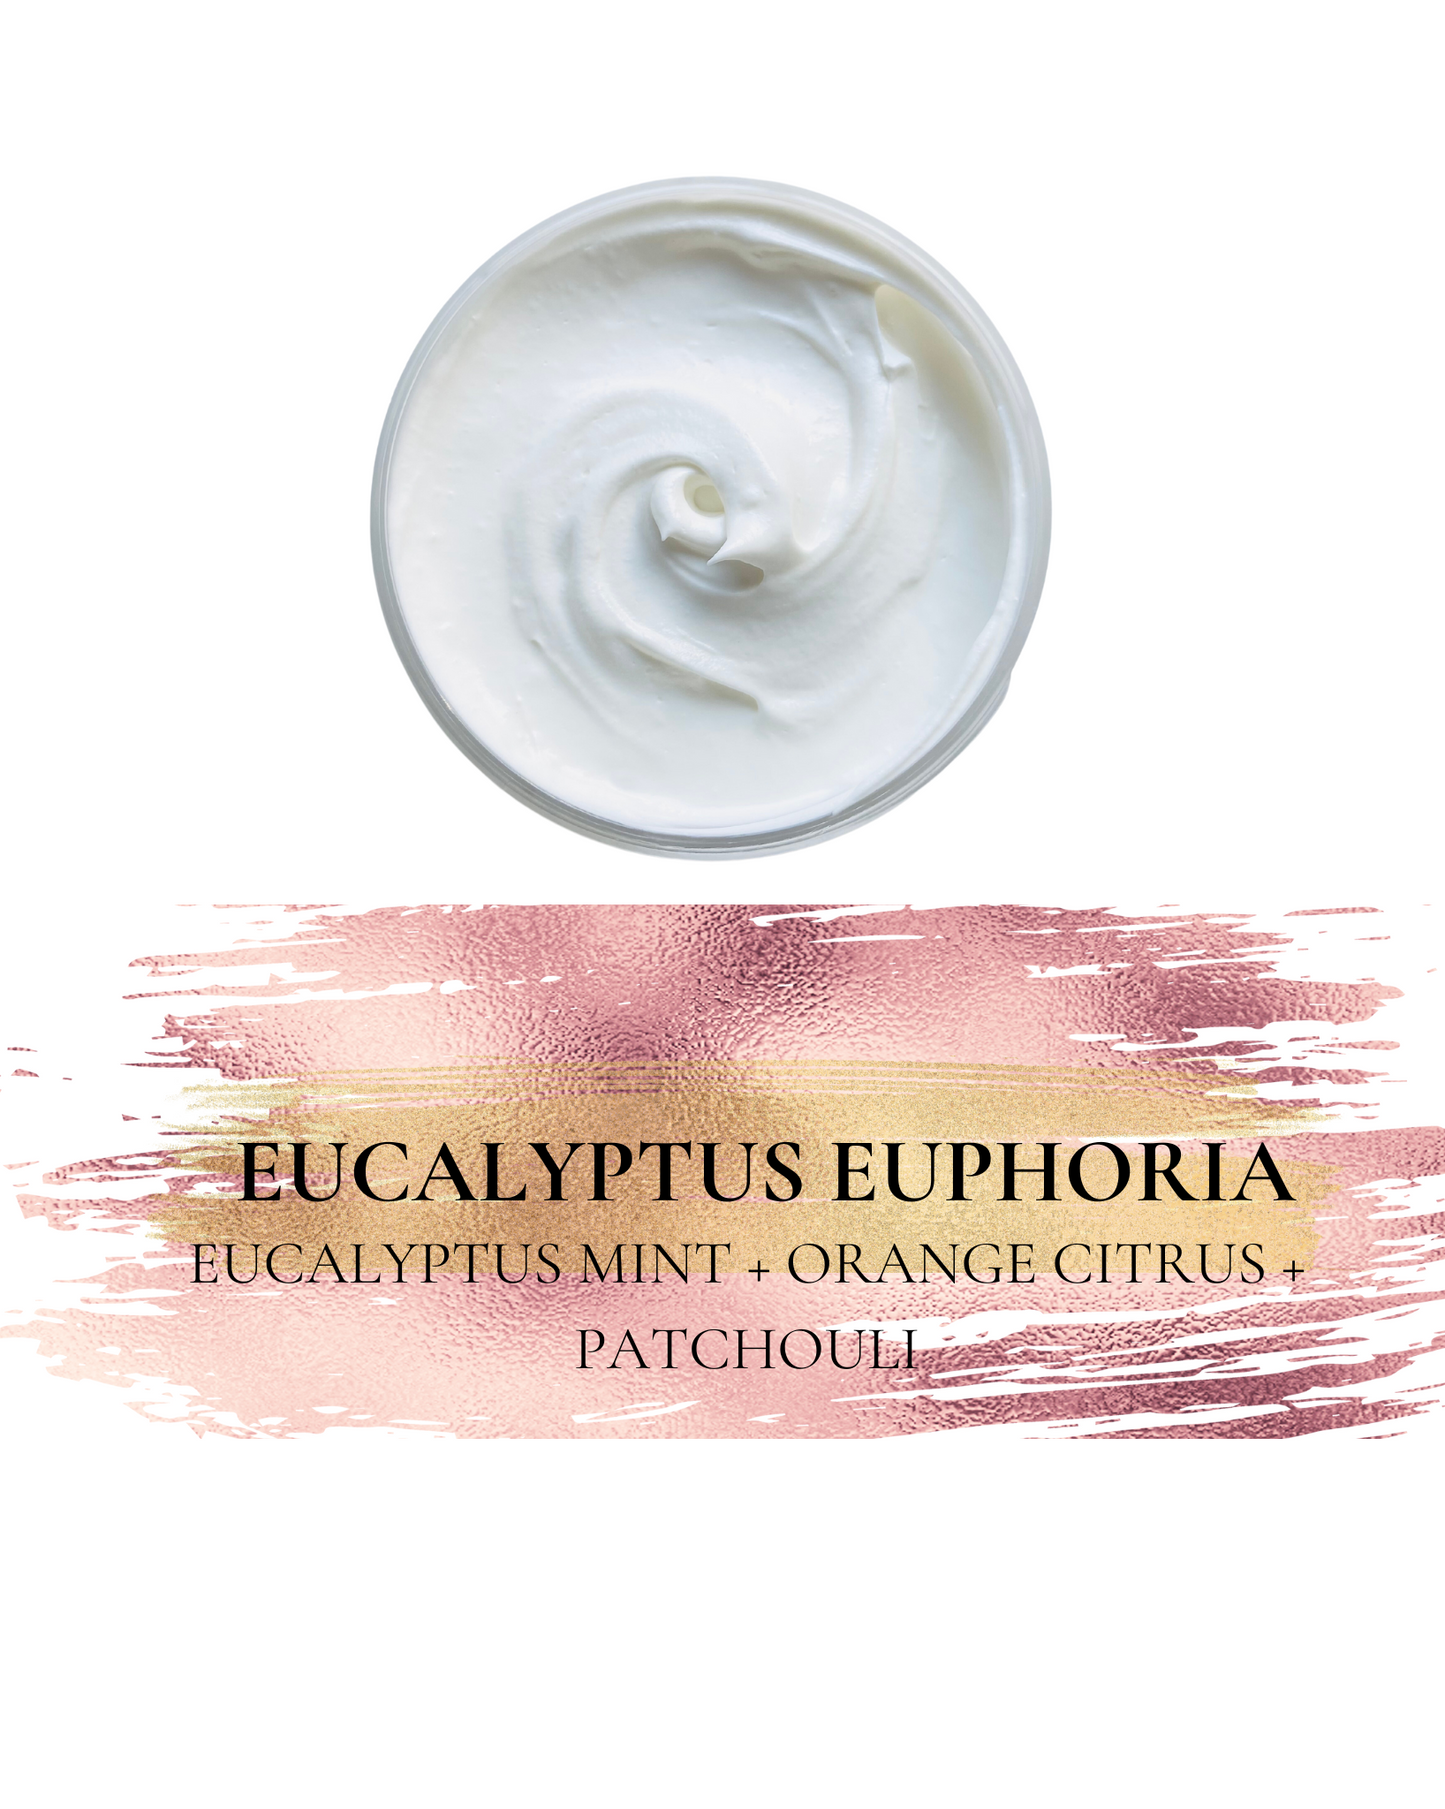 EUCALYPTUS EUPHORIA WHIPPED BODY BUTTER